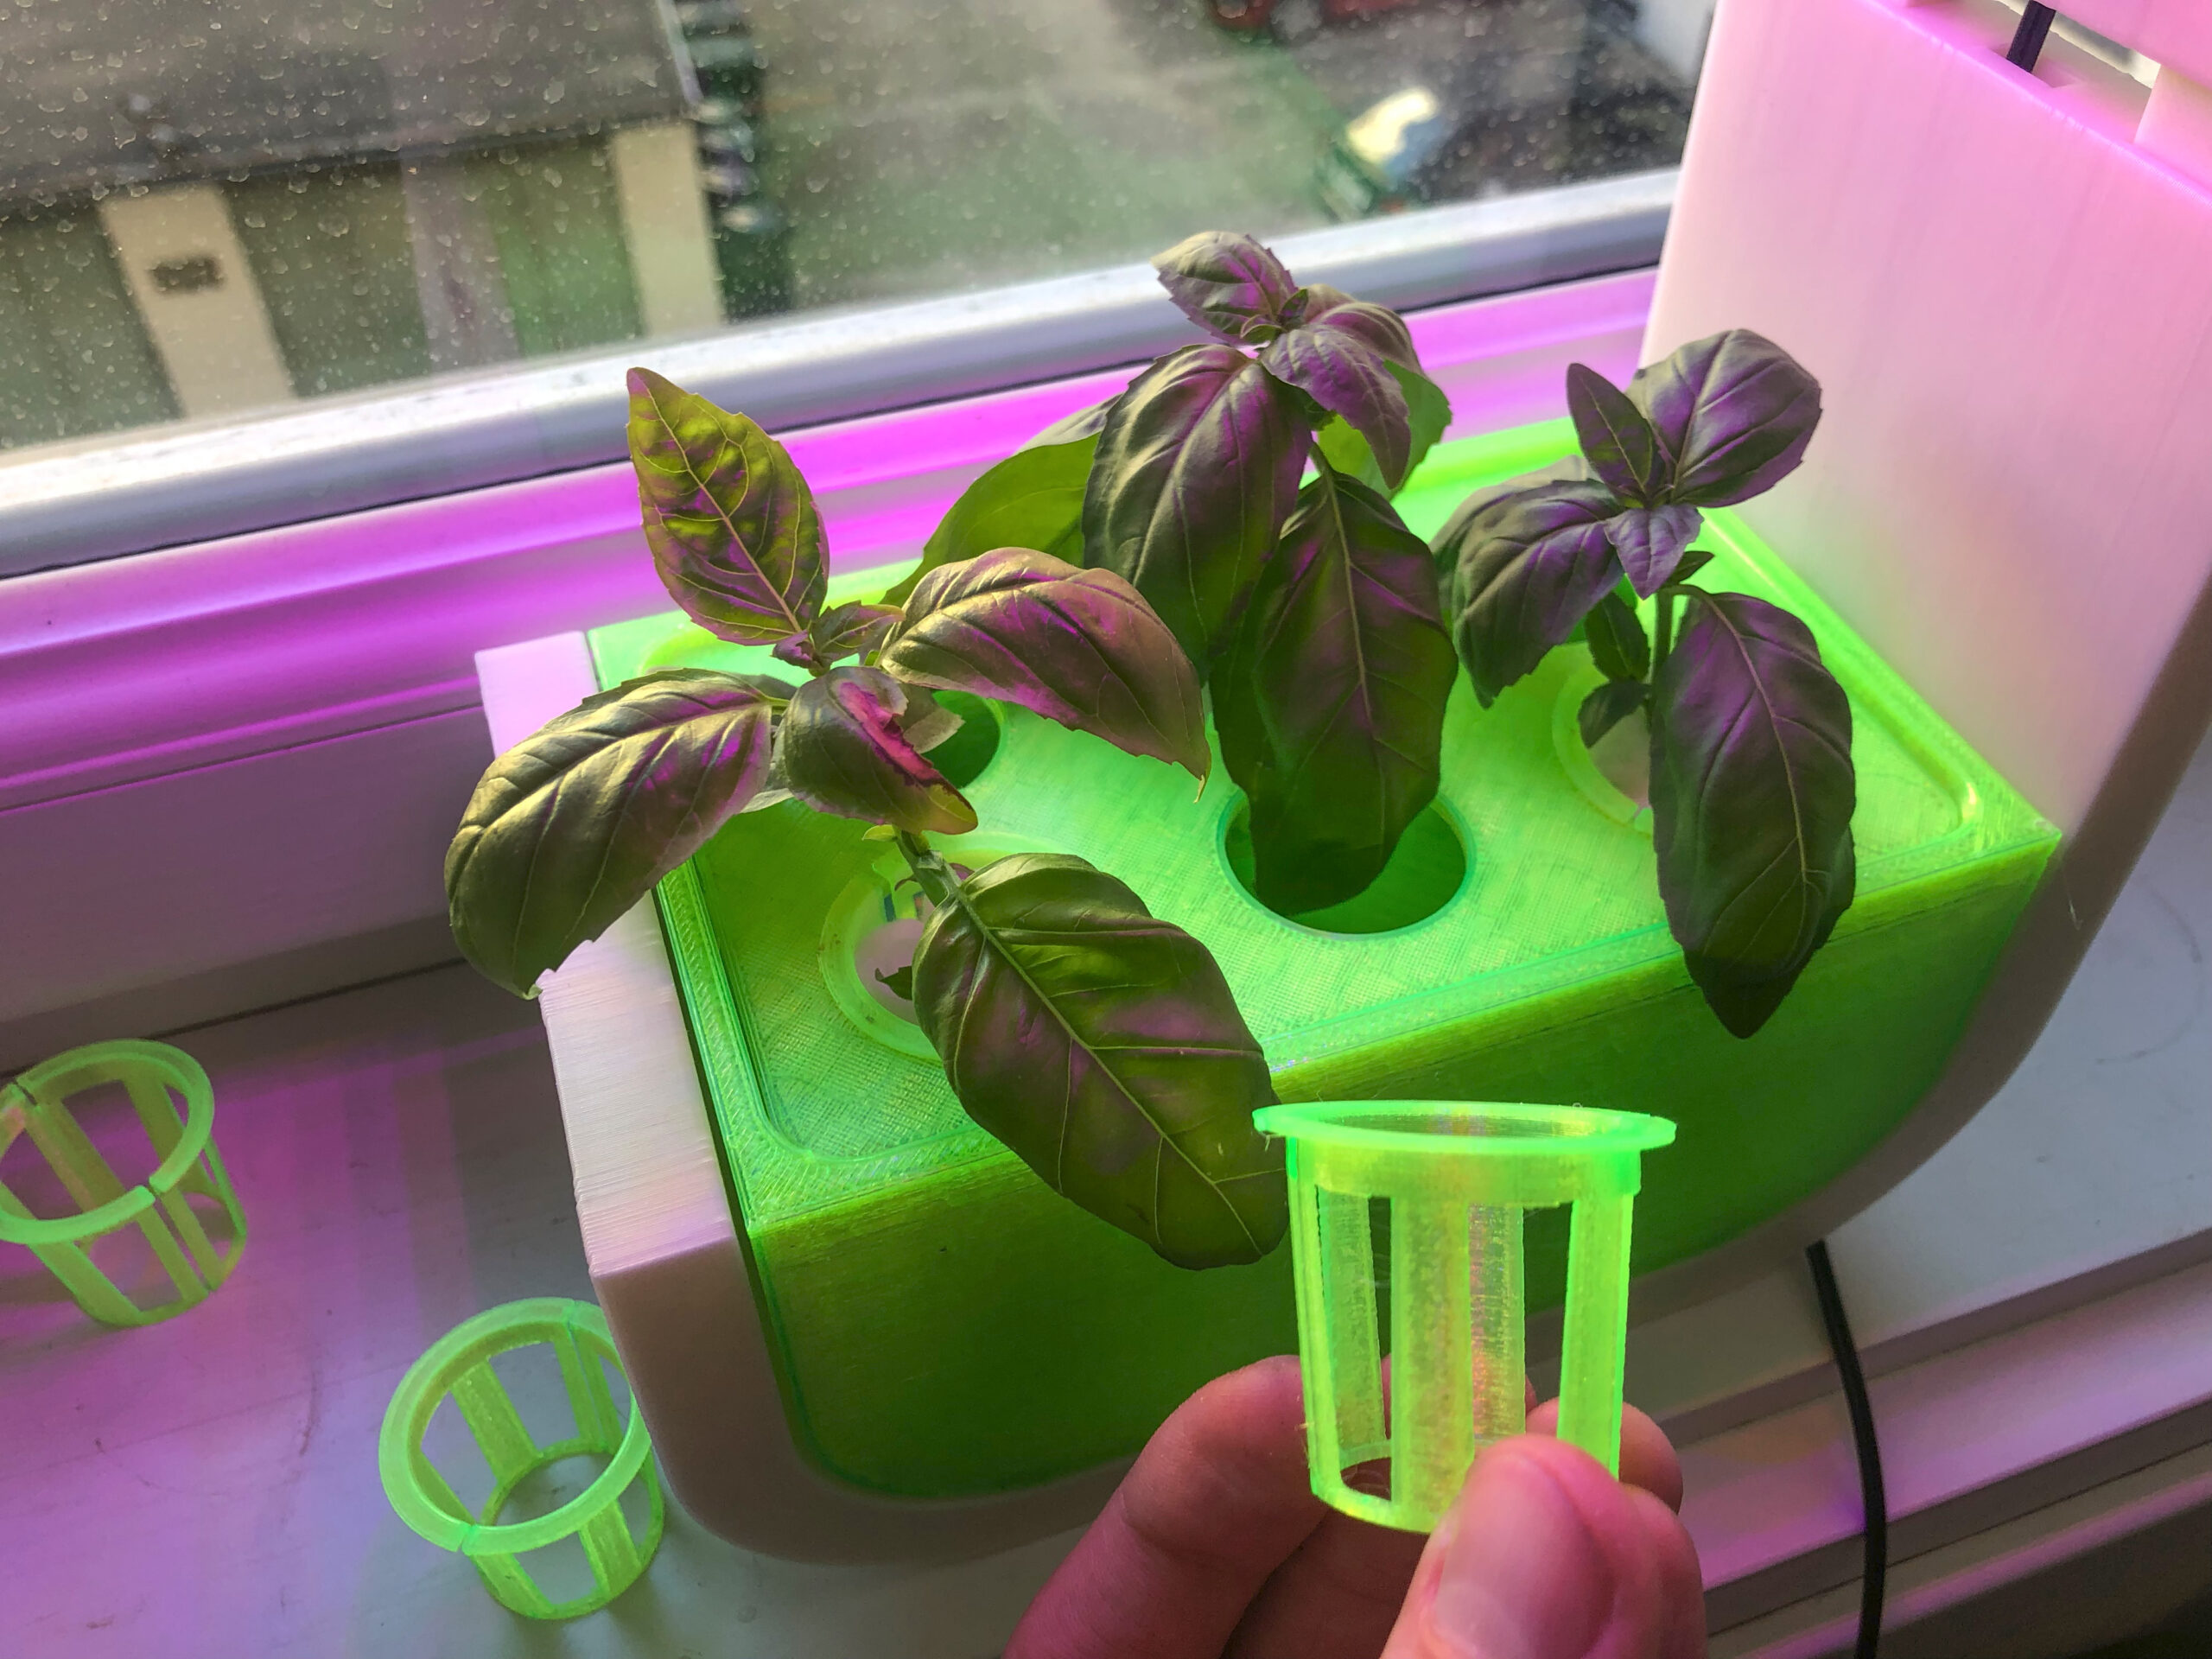 Uartig Microbe Modregning Meaningful uses of 3D Printing in Gardening - Original Prusa 3D Printers